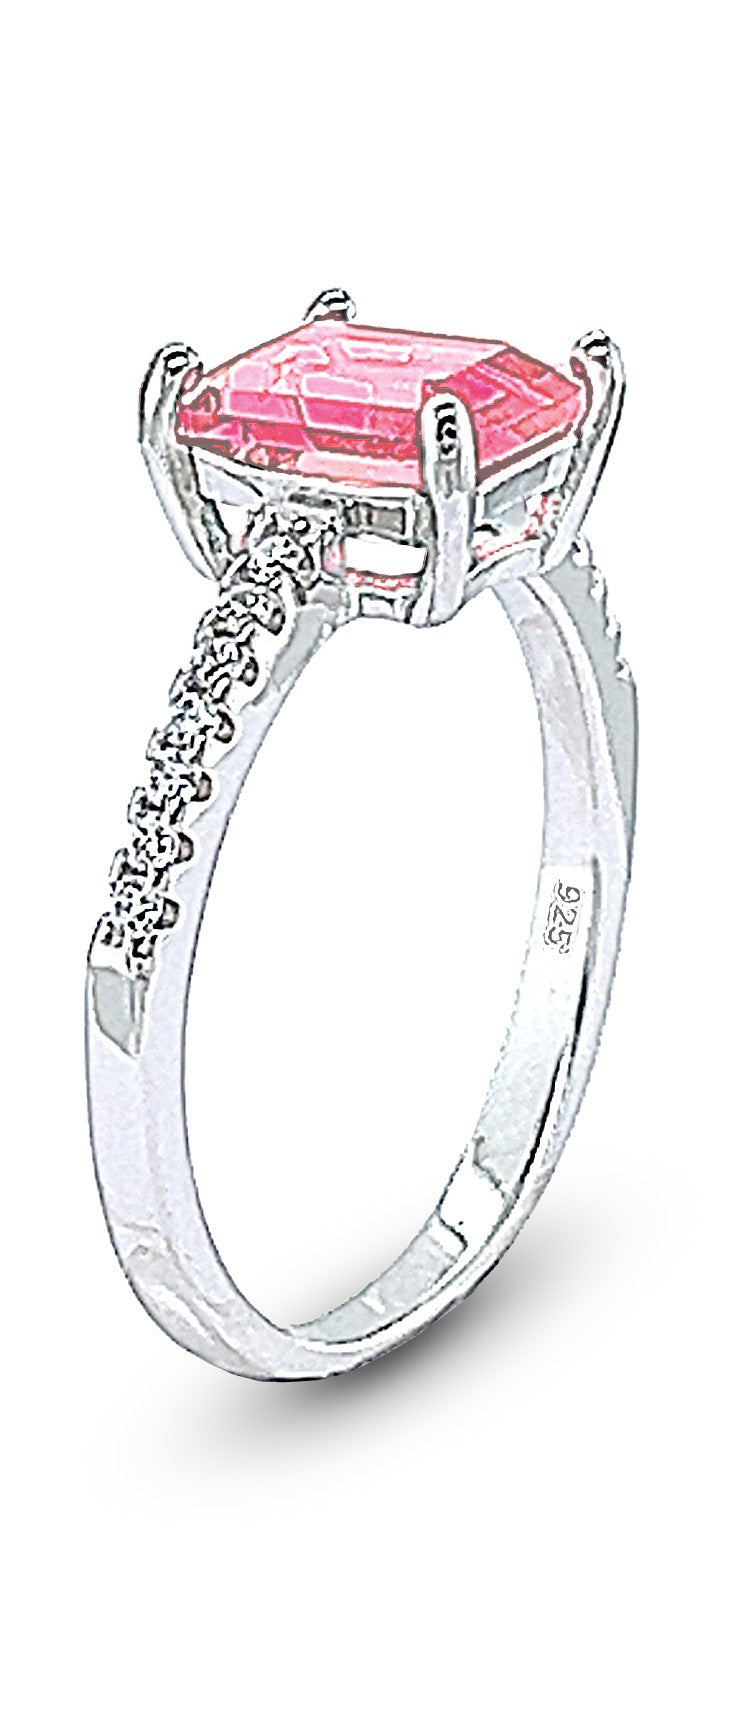 RINGS- טבעת זרקונים  עם אבן צבעונית